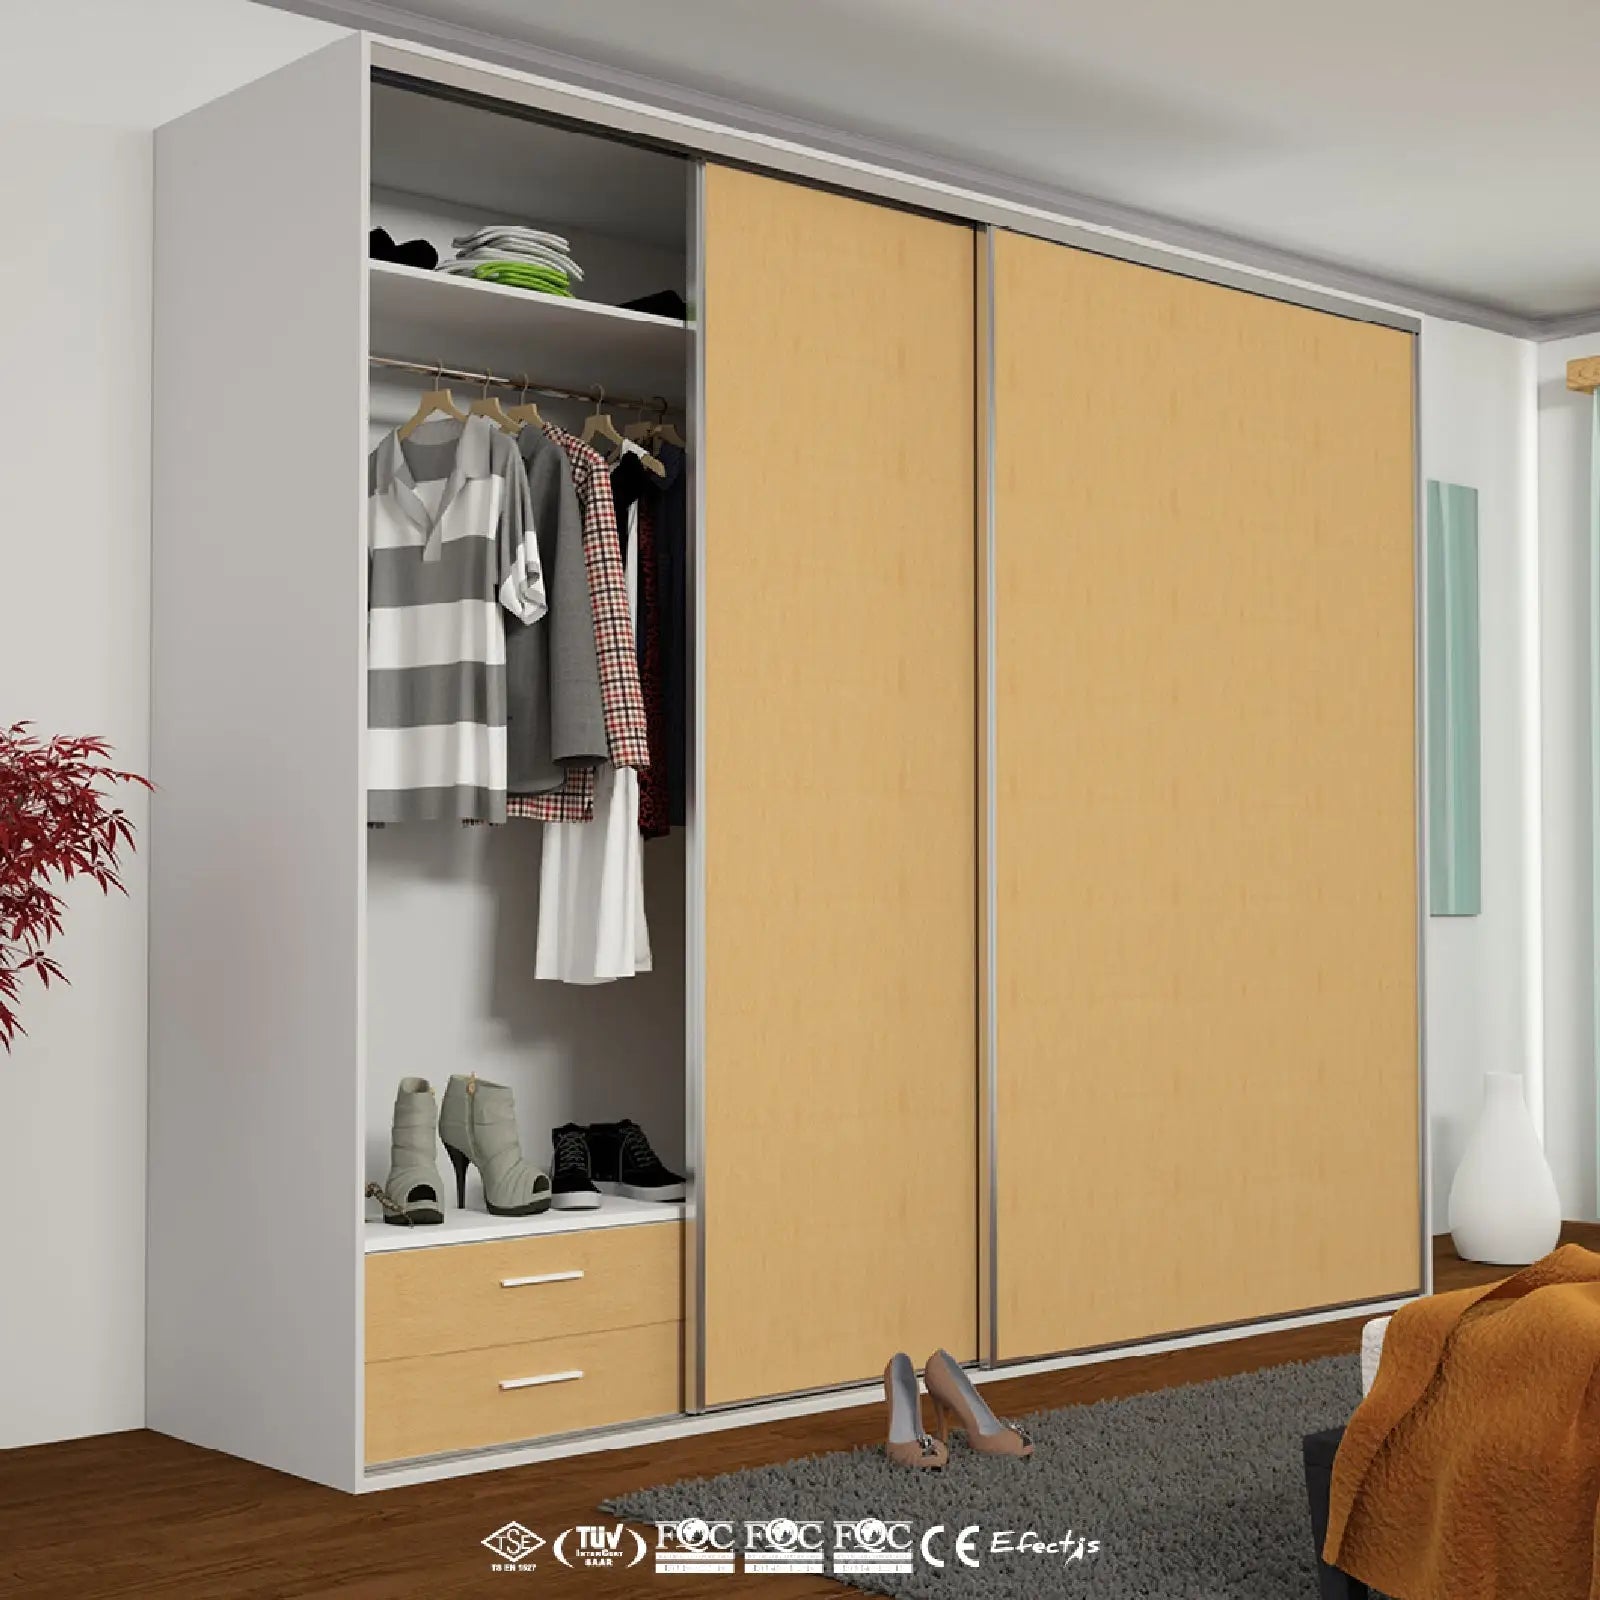 PS-Slide Sliding Door Wardrobe System - 3 Door - 3600mm Track - Both Way Soft Close - Decor And Decor